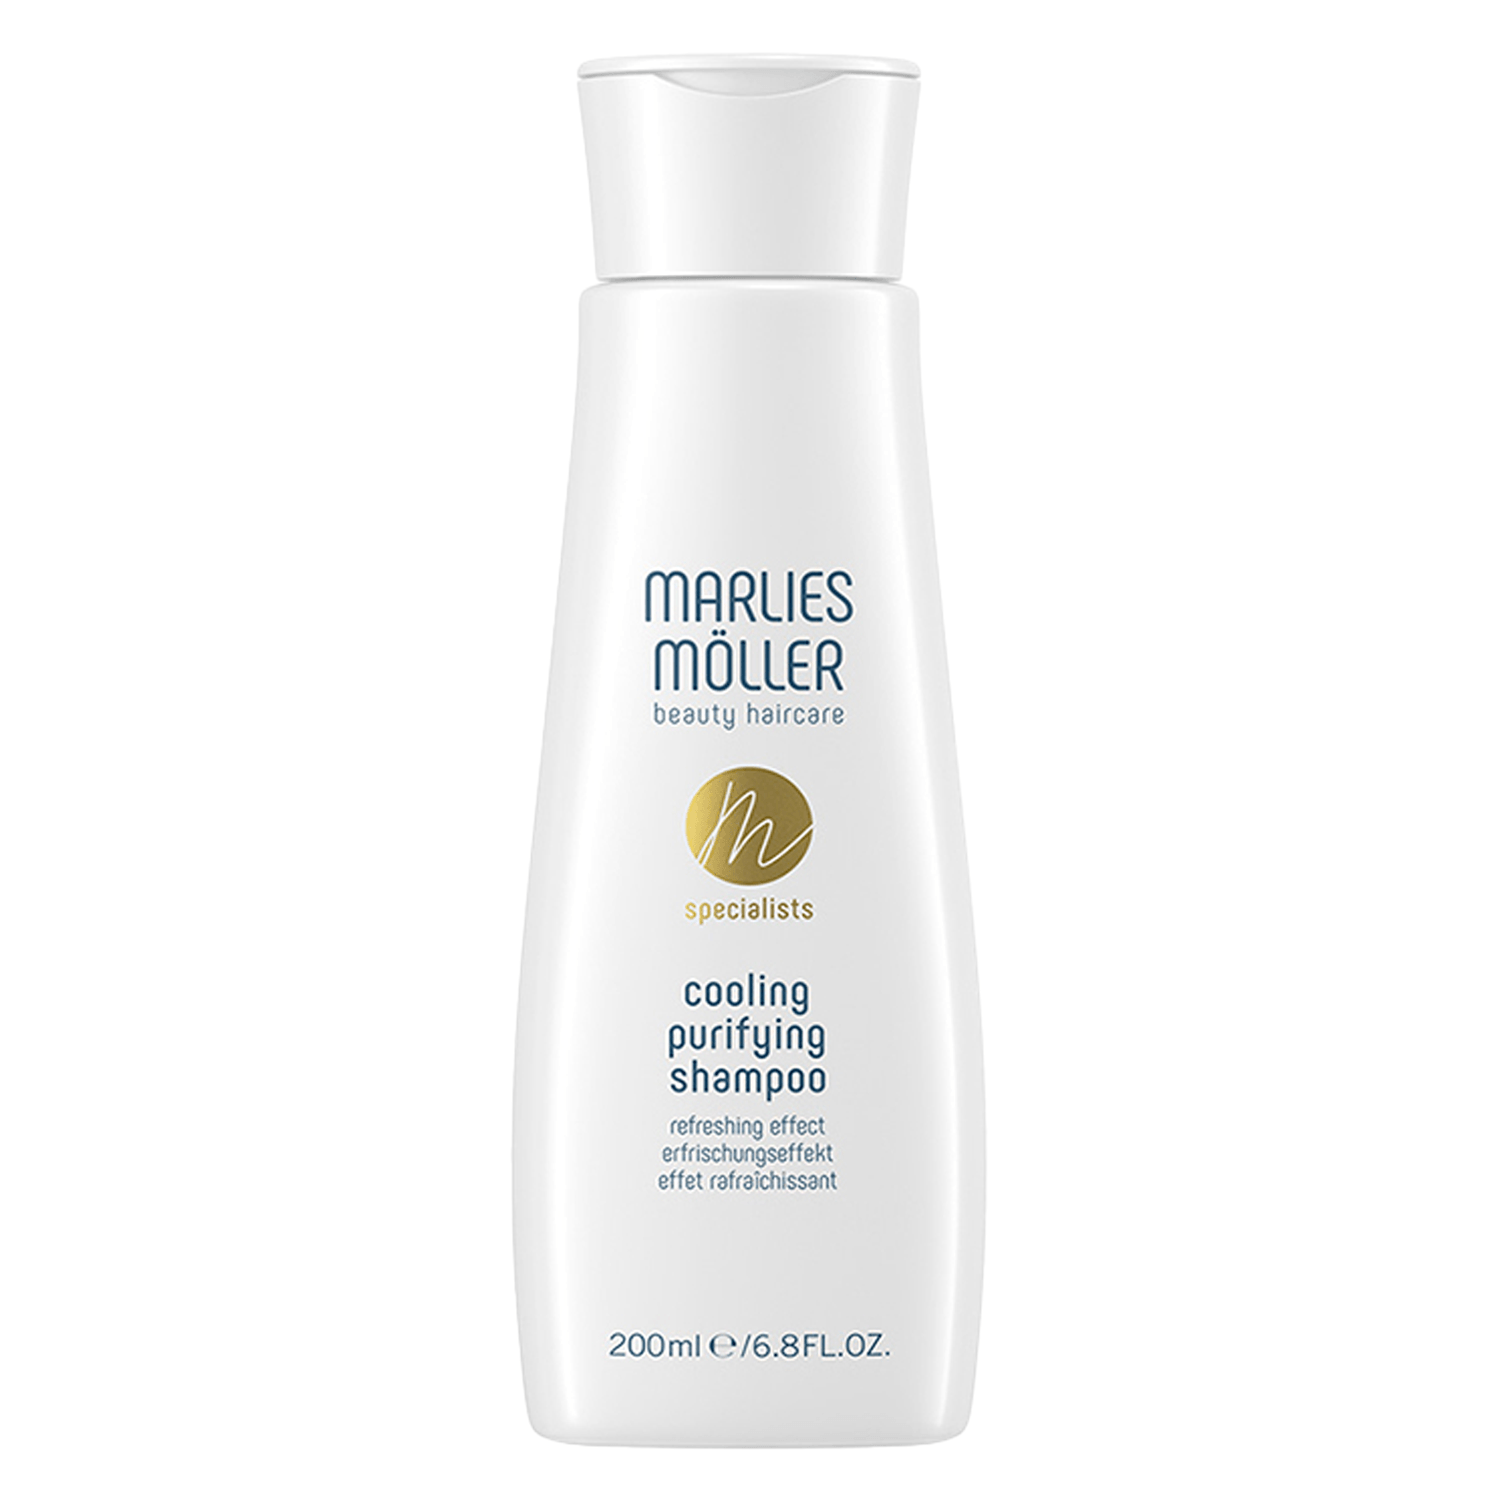 Produktbild von MM Specialists - Cooling Purifying Shampoo